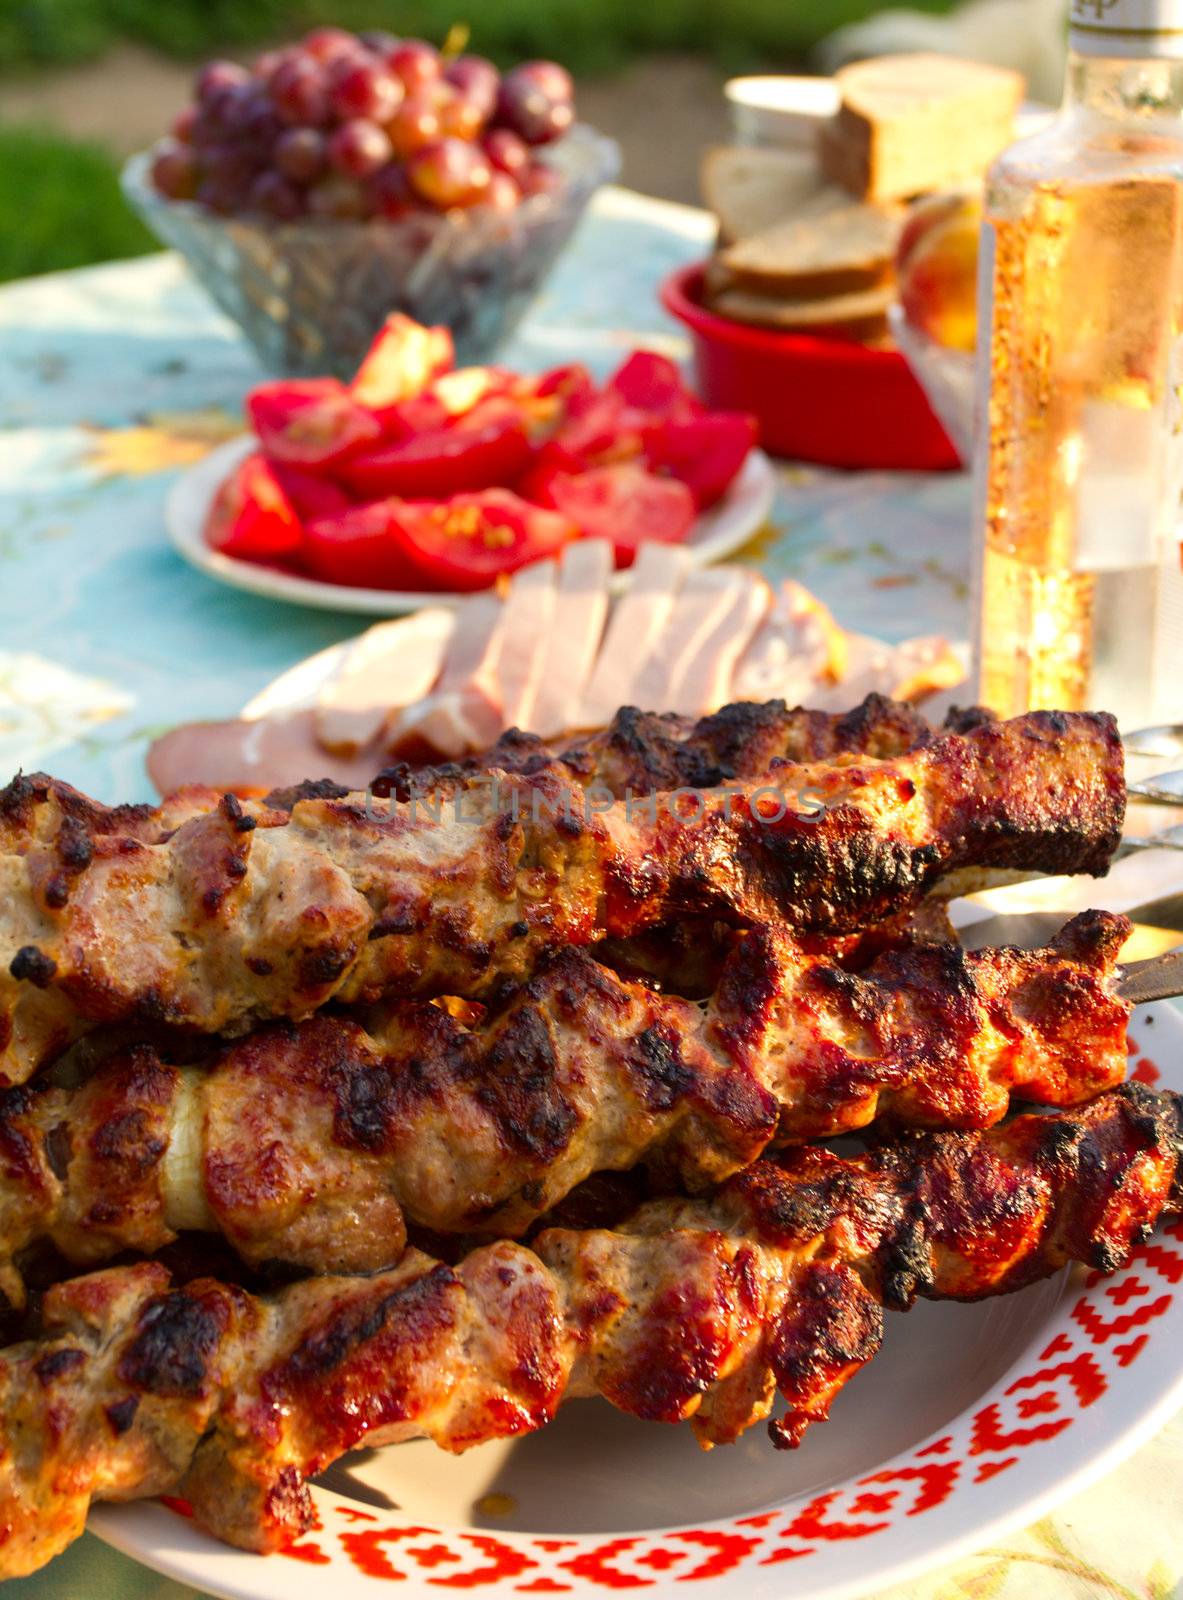 prepared kebab on plate